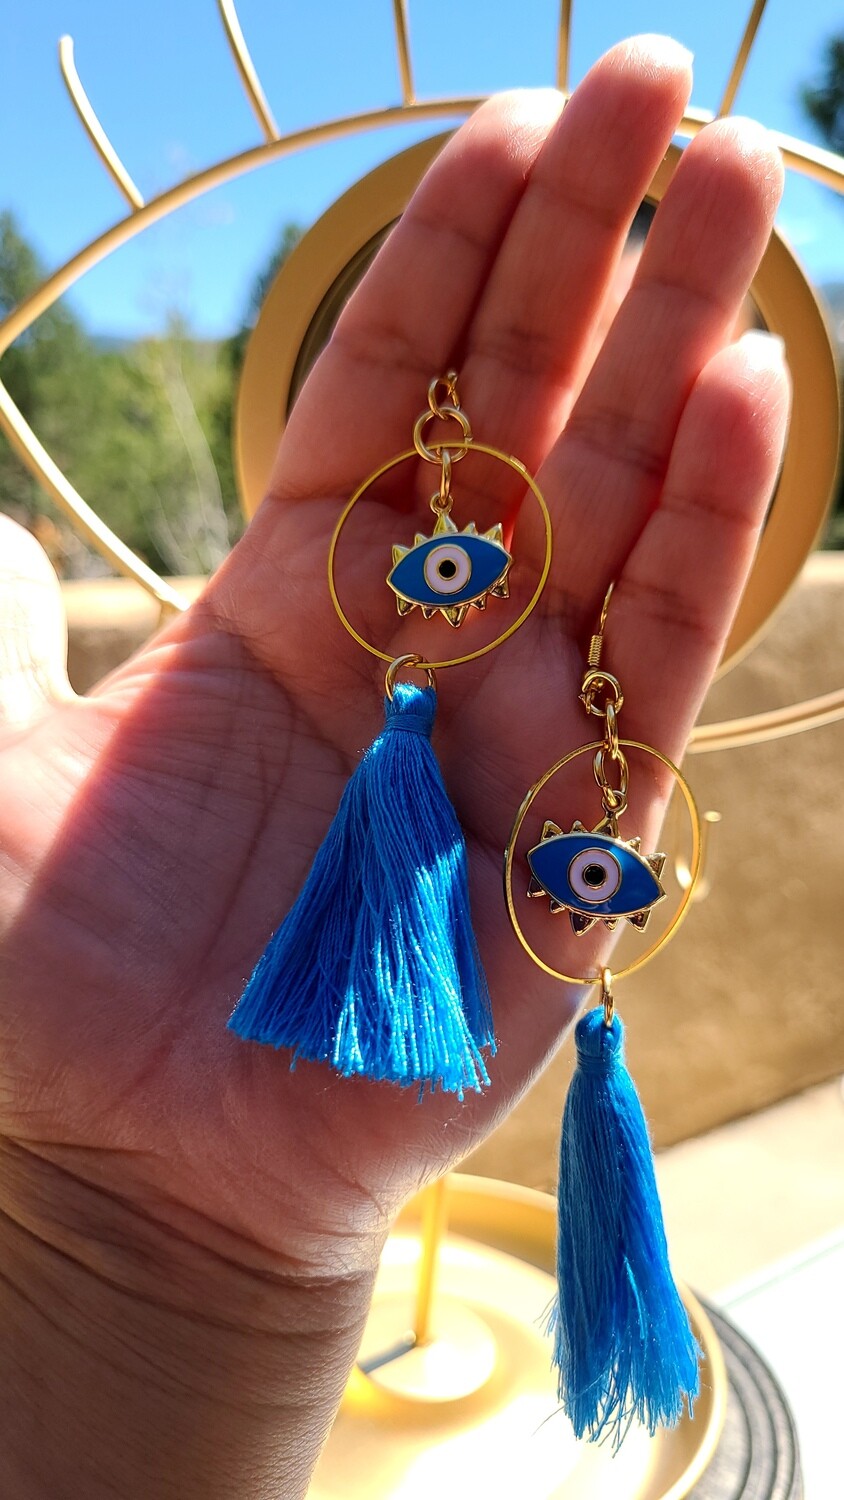 Evil eye earrings with tassels